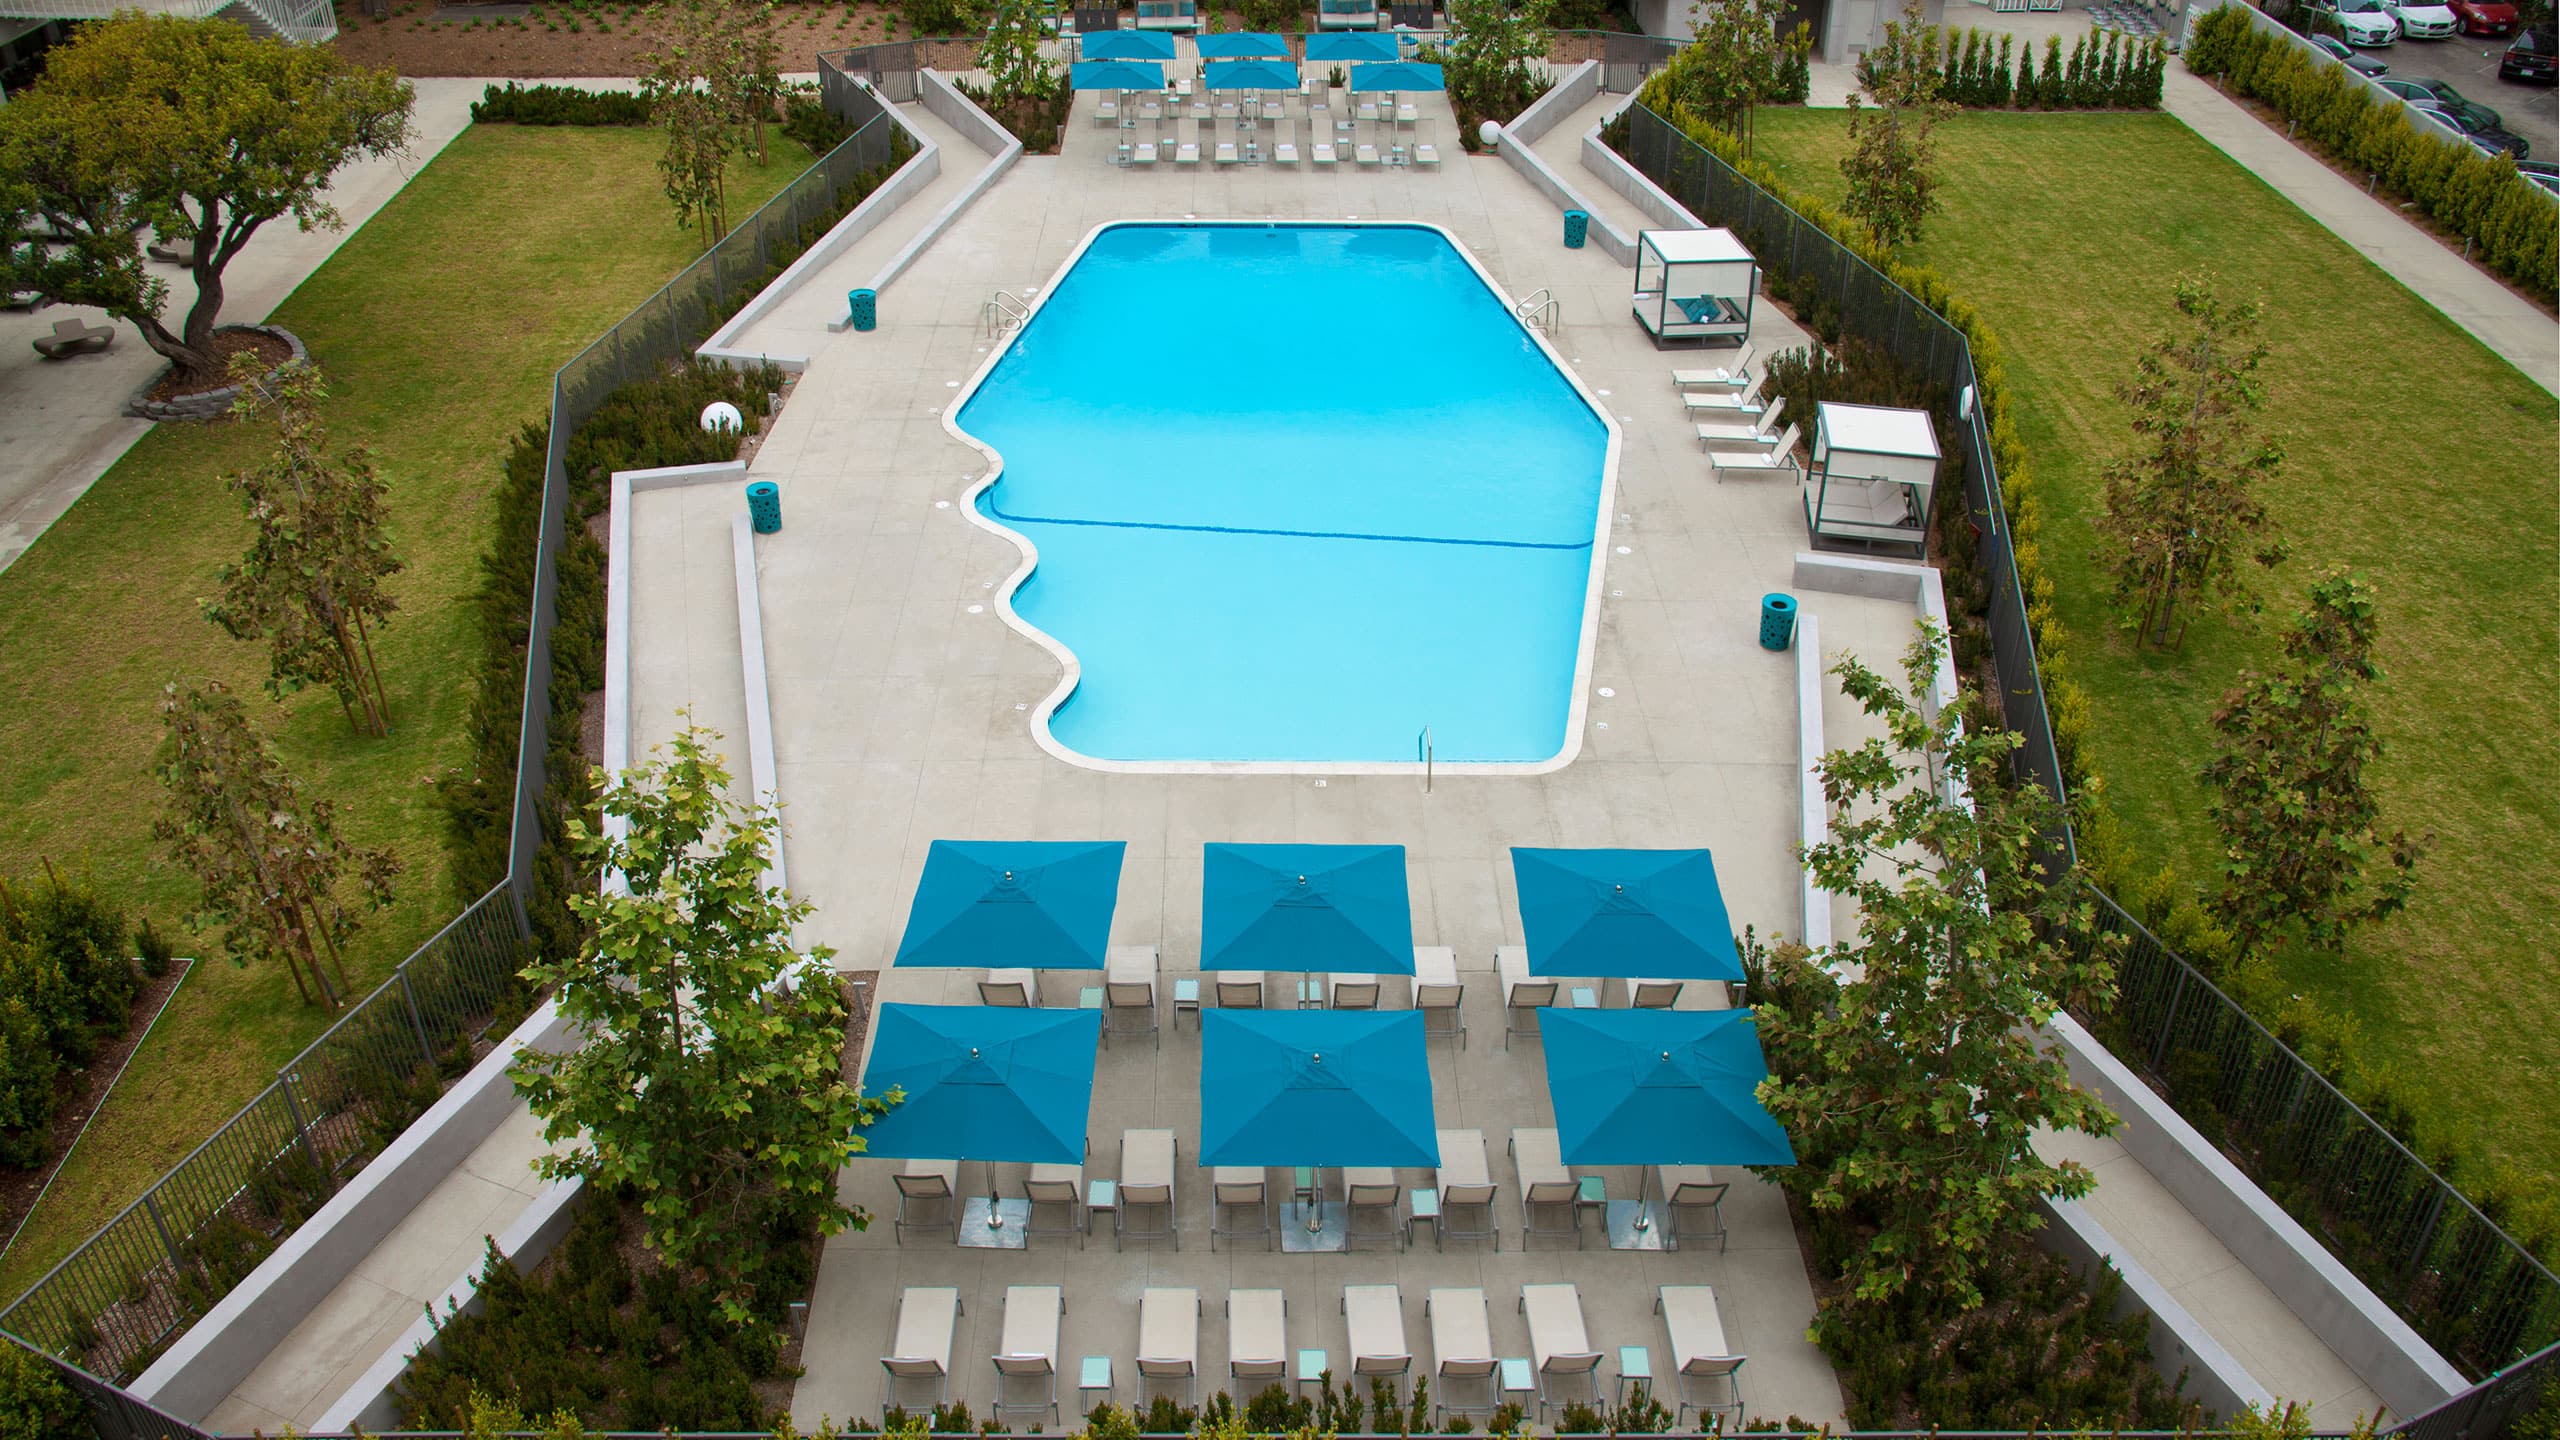 Hyatt Regency Los Angeles International Airport Pool Cabanas